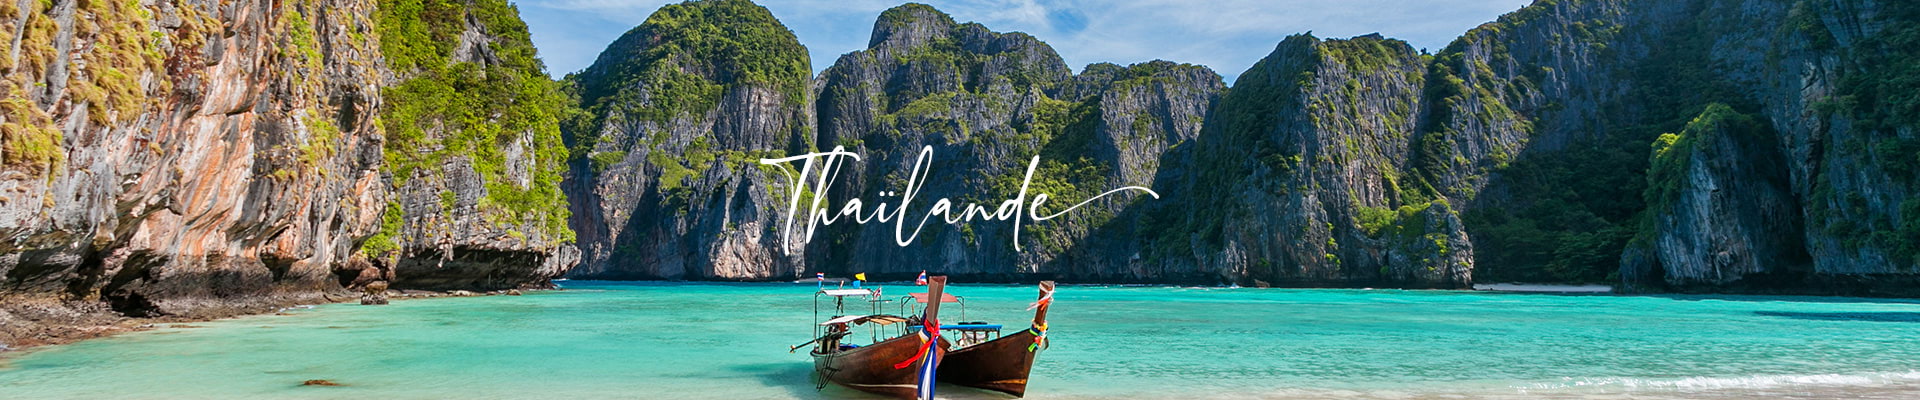 images/panos/desktop/thailande